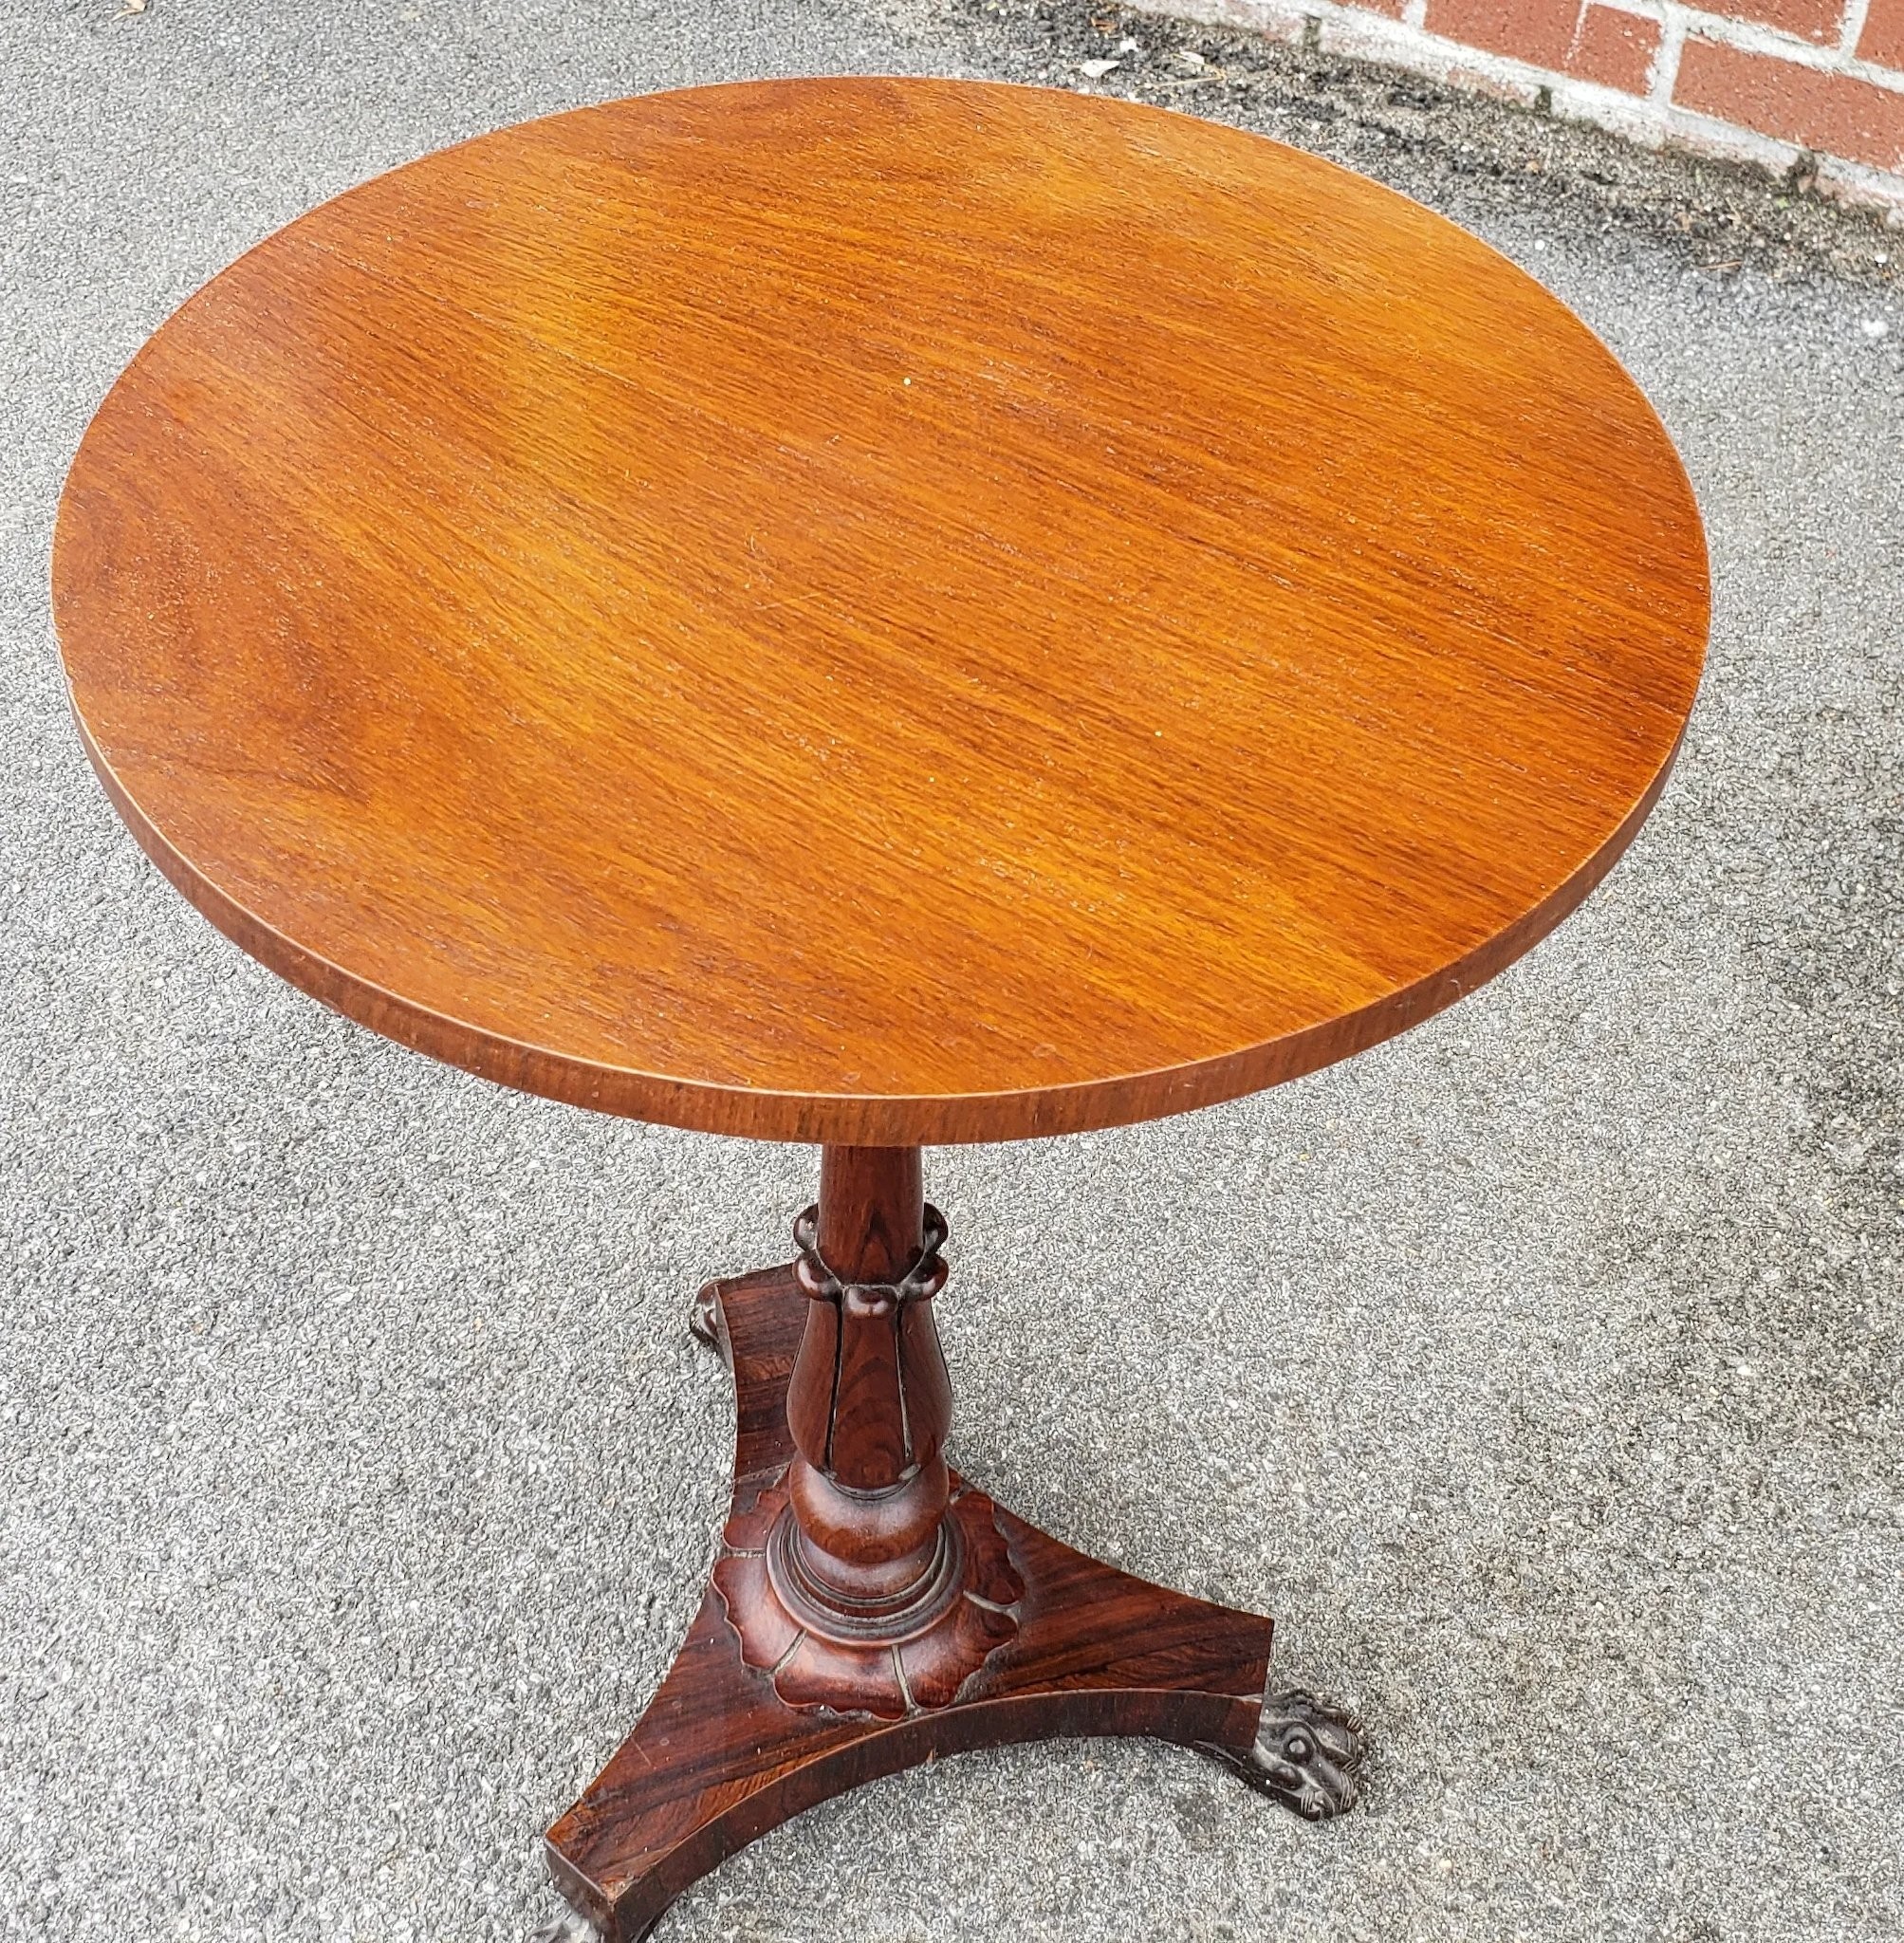 Antique 19th century regency rosewood pedestal table c1840